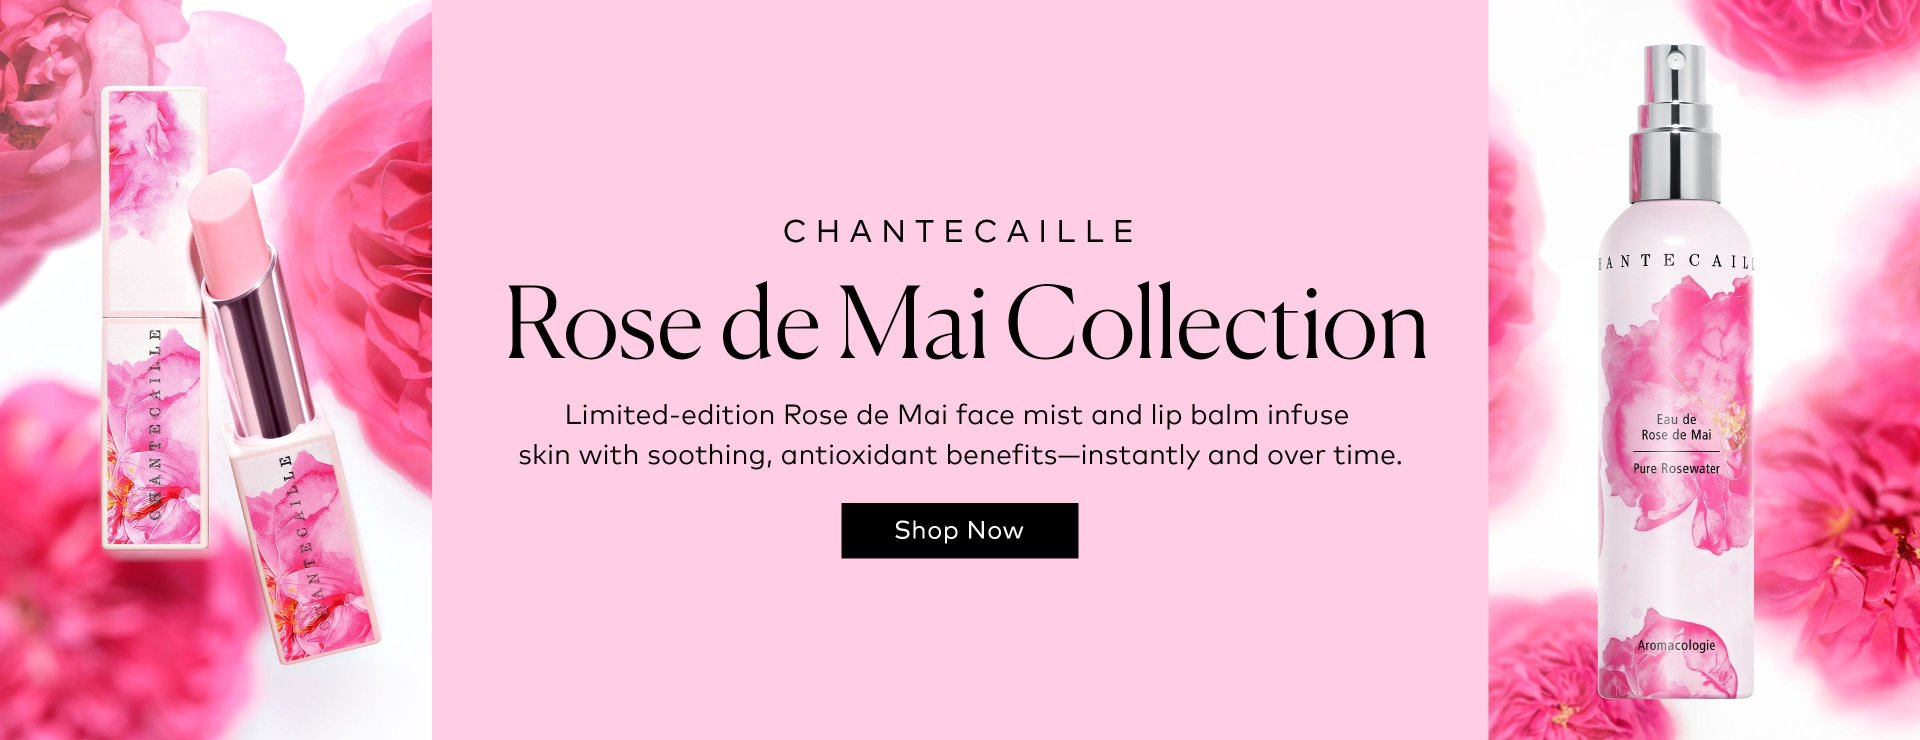 Shop the Chantecaille Rose de Mai Collection on Beautylish.com!